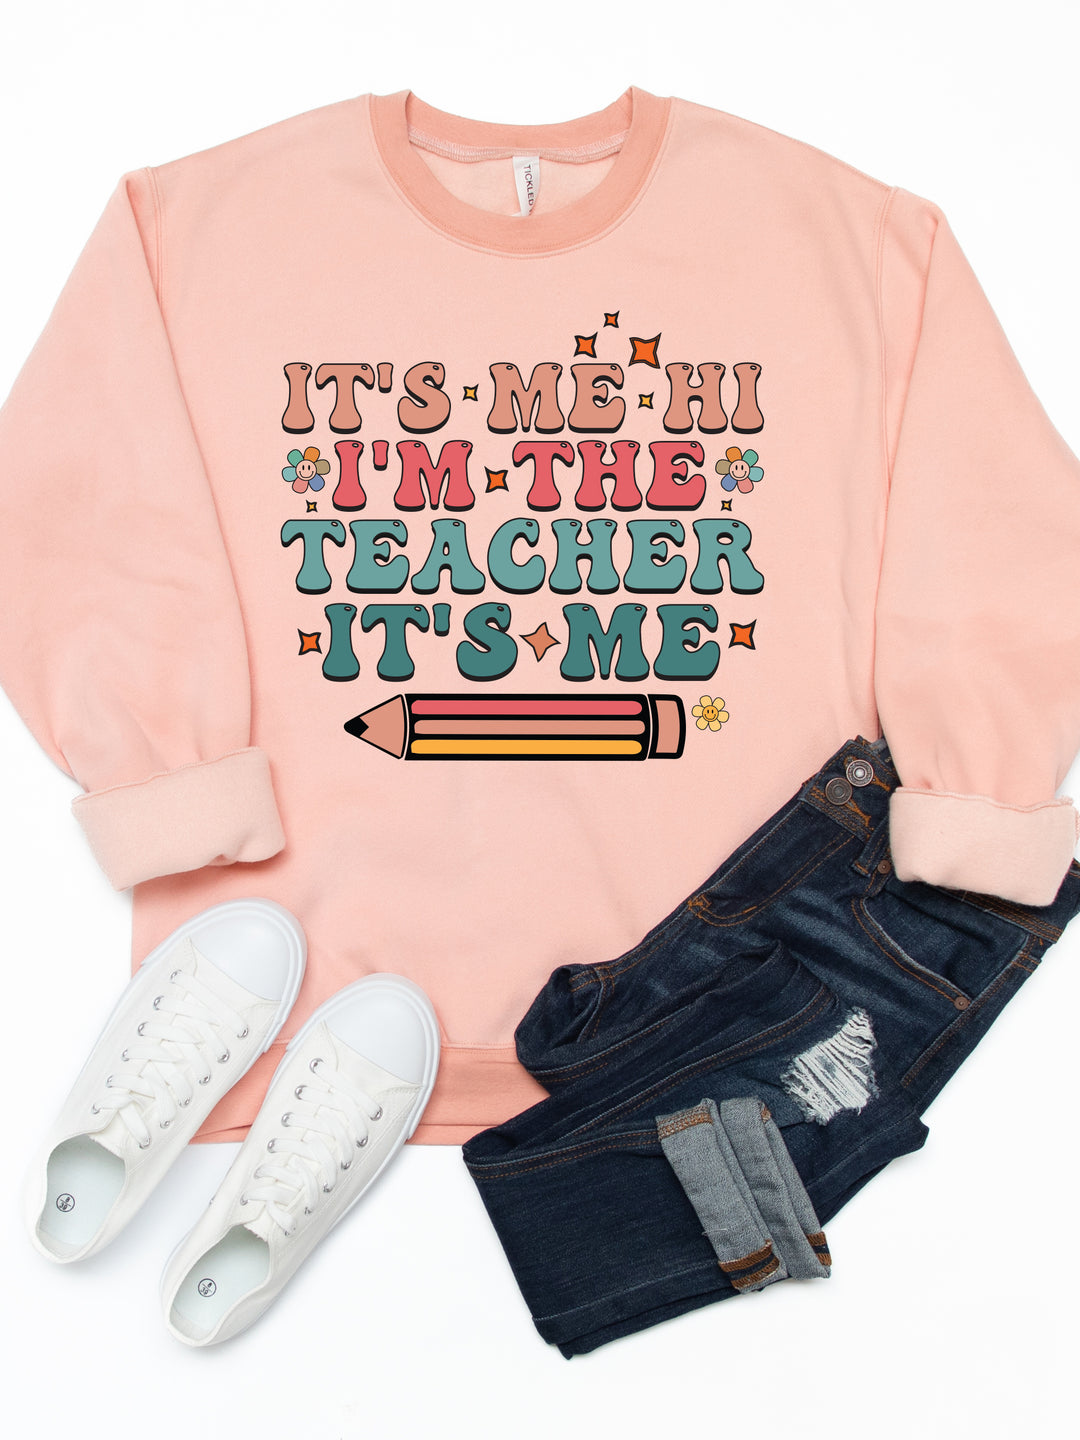 It's Me, Hi, I'm the Teacher, It's Me Graphic Sweatshirt